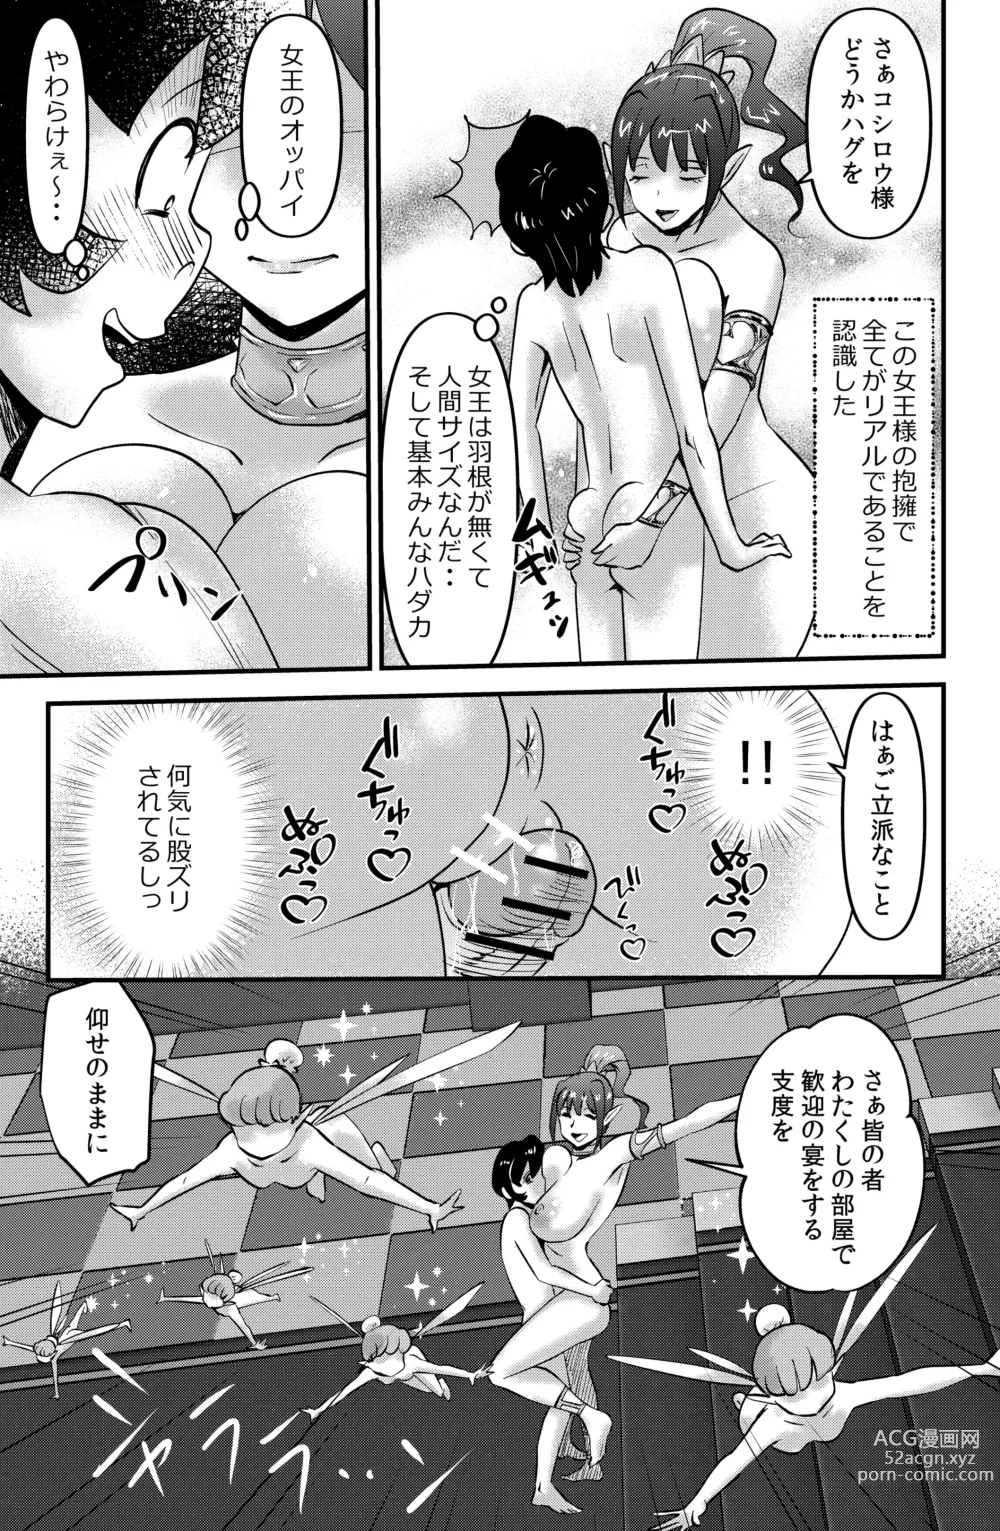 Page 5 of doujinshi Isekai Tensei Mono